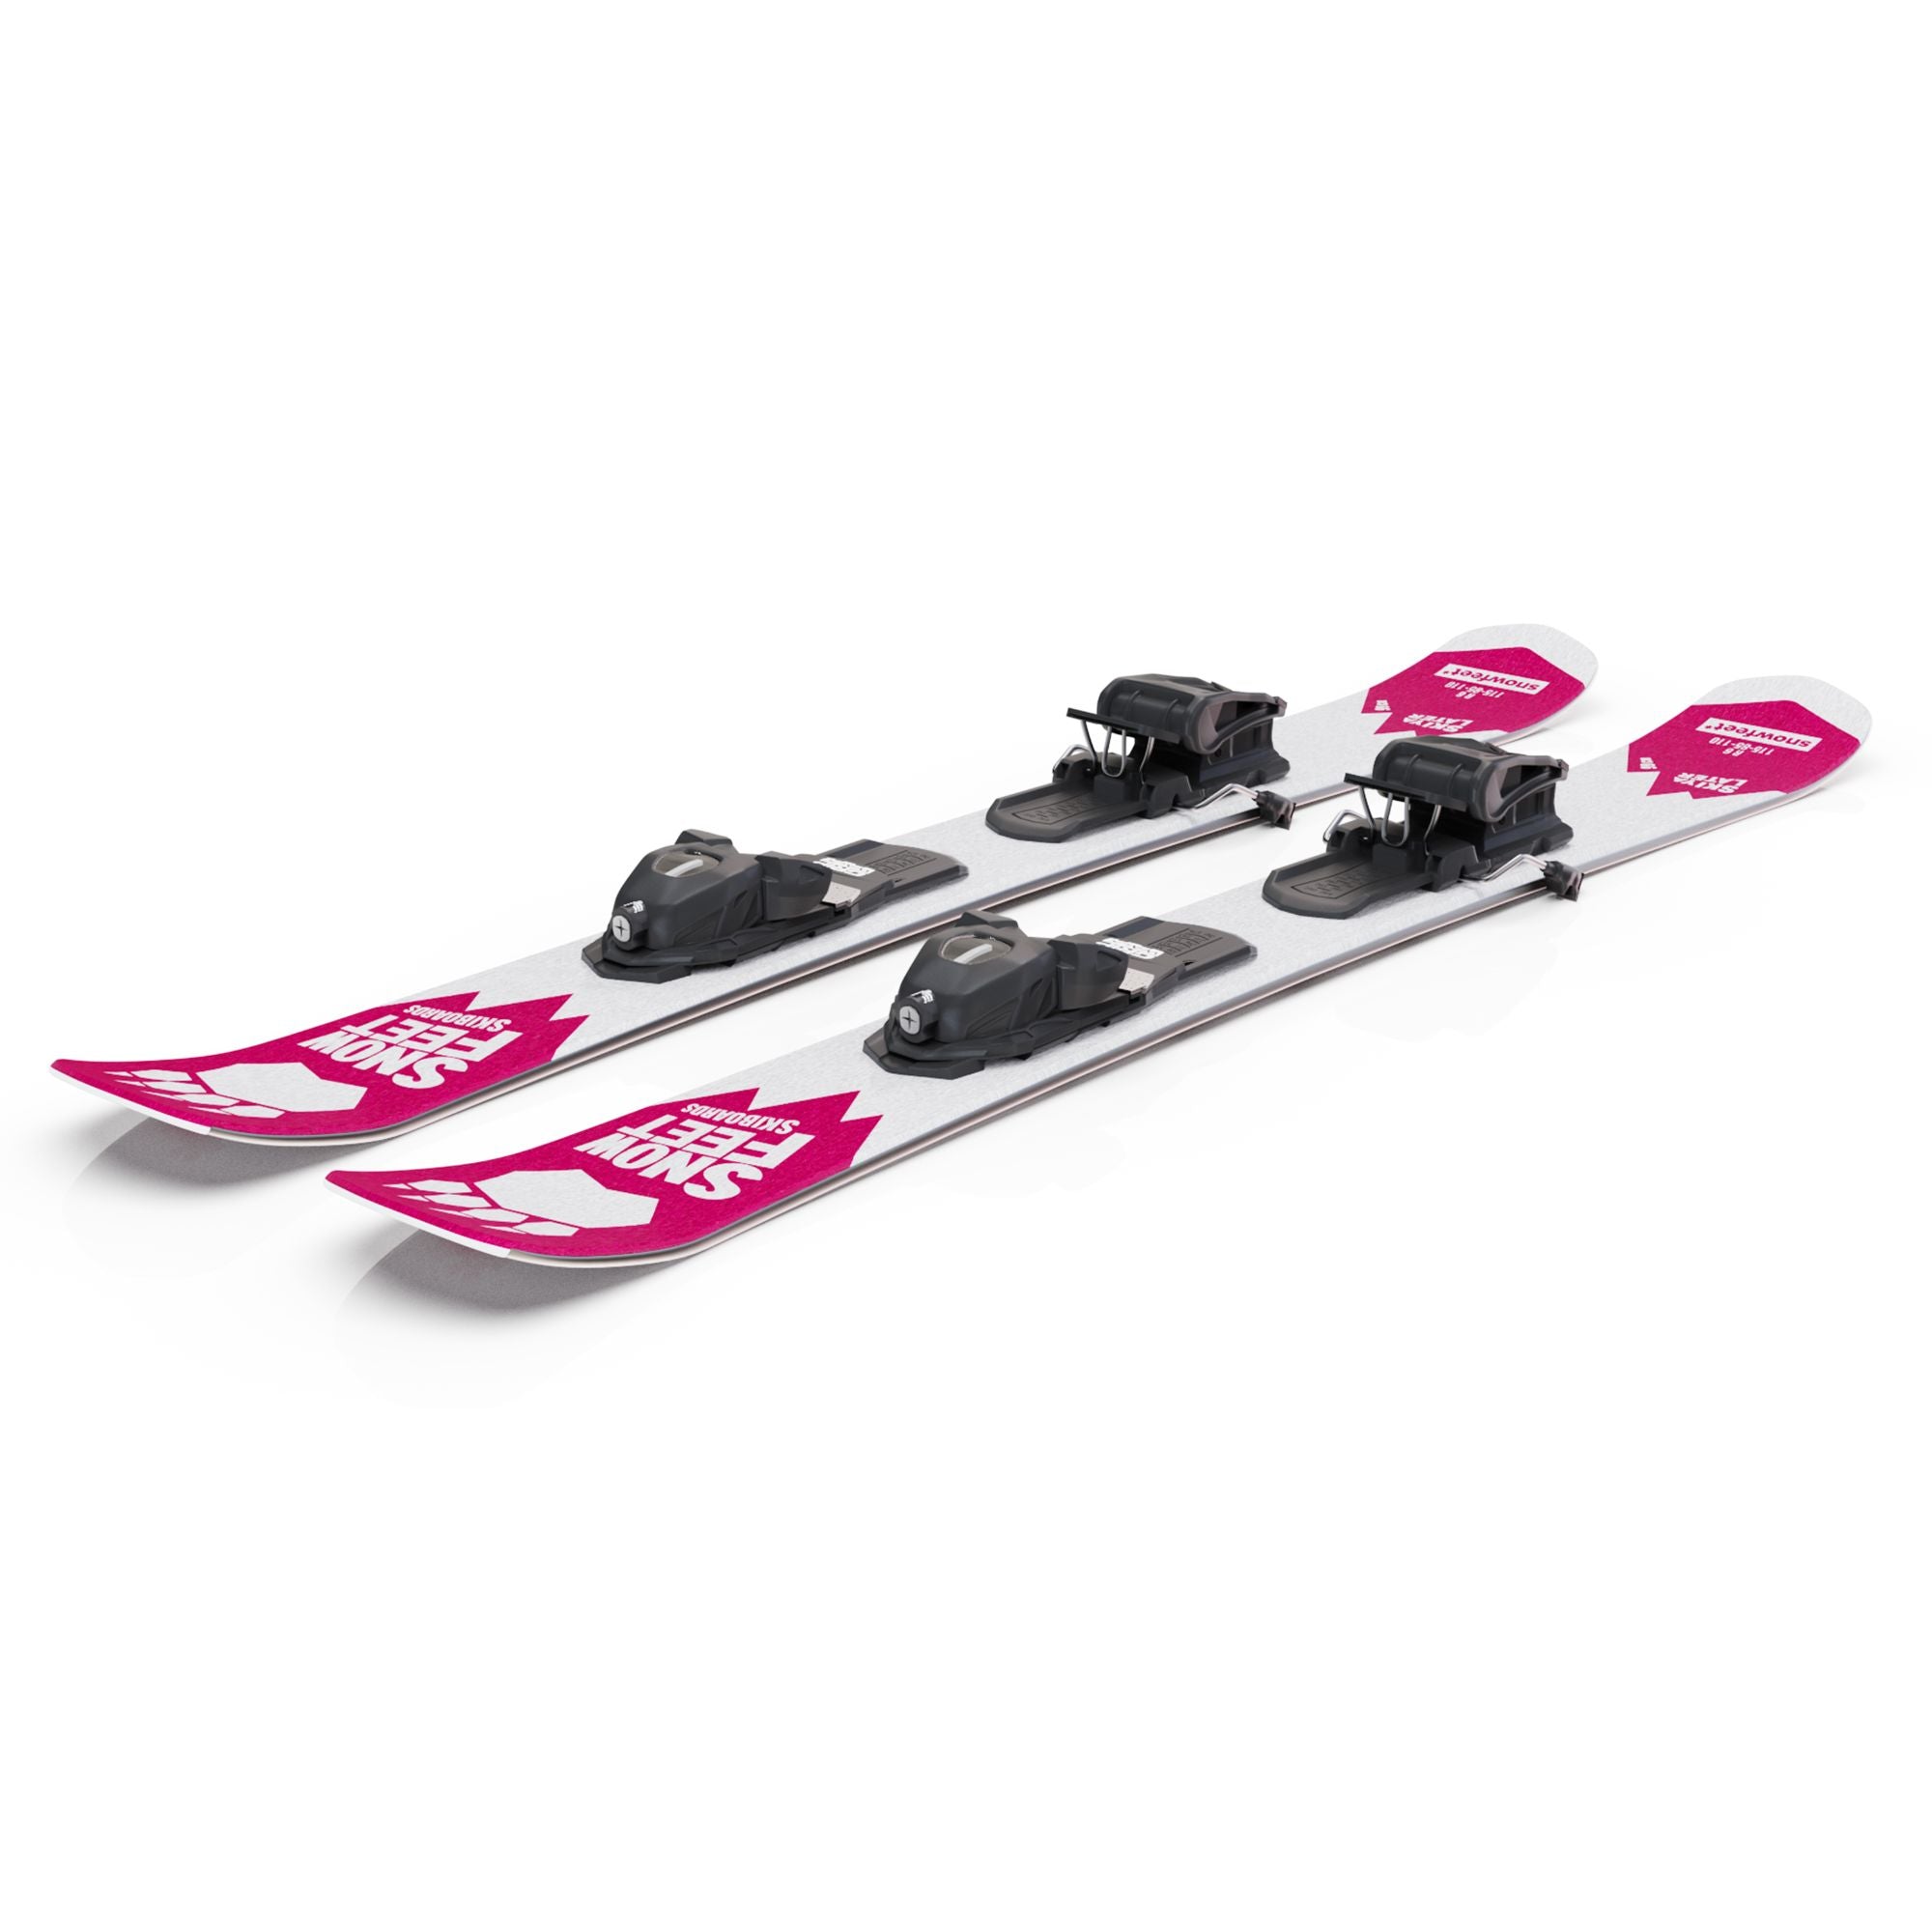 Snowfeet* Skiblades | 99 CM | Skiboards Snowblades Short Skis